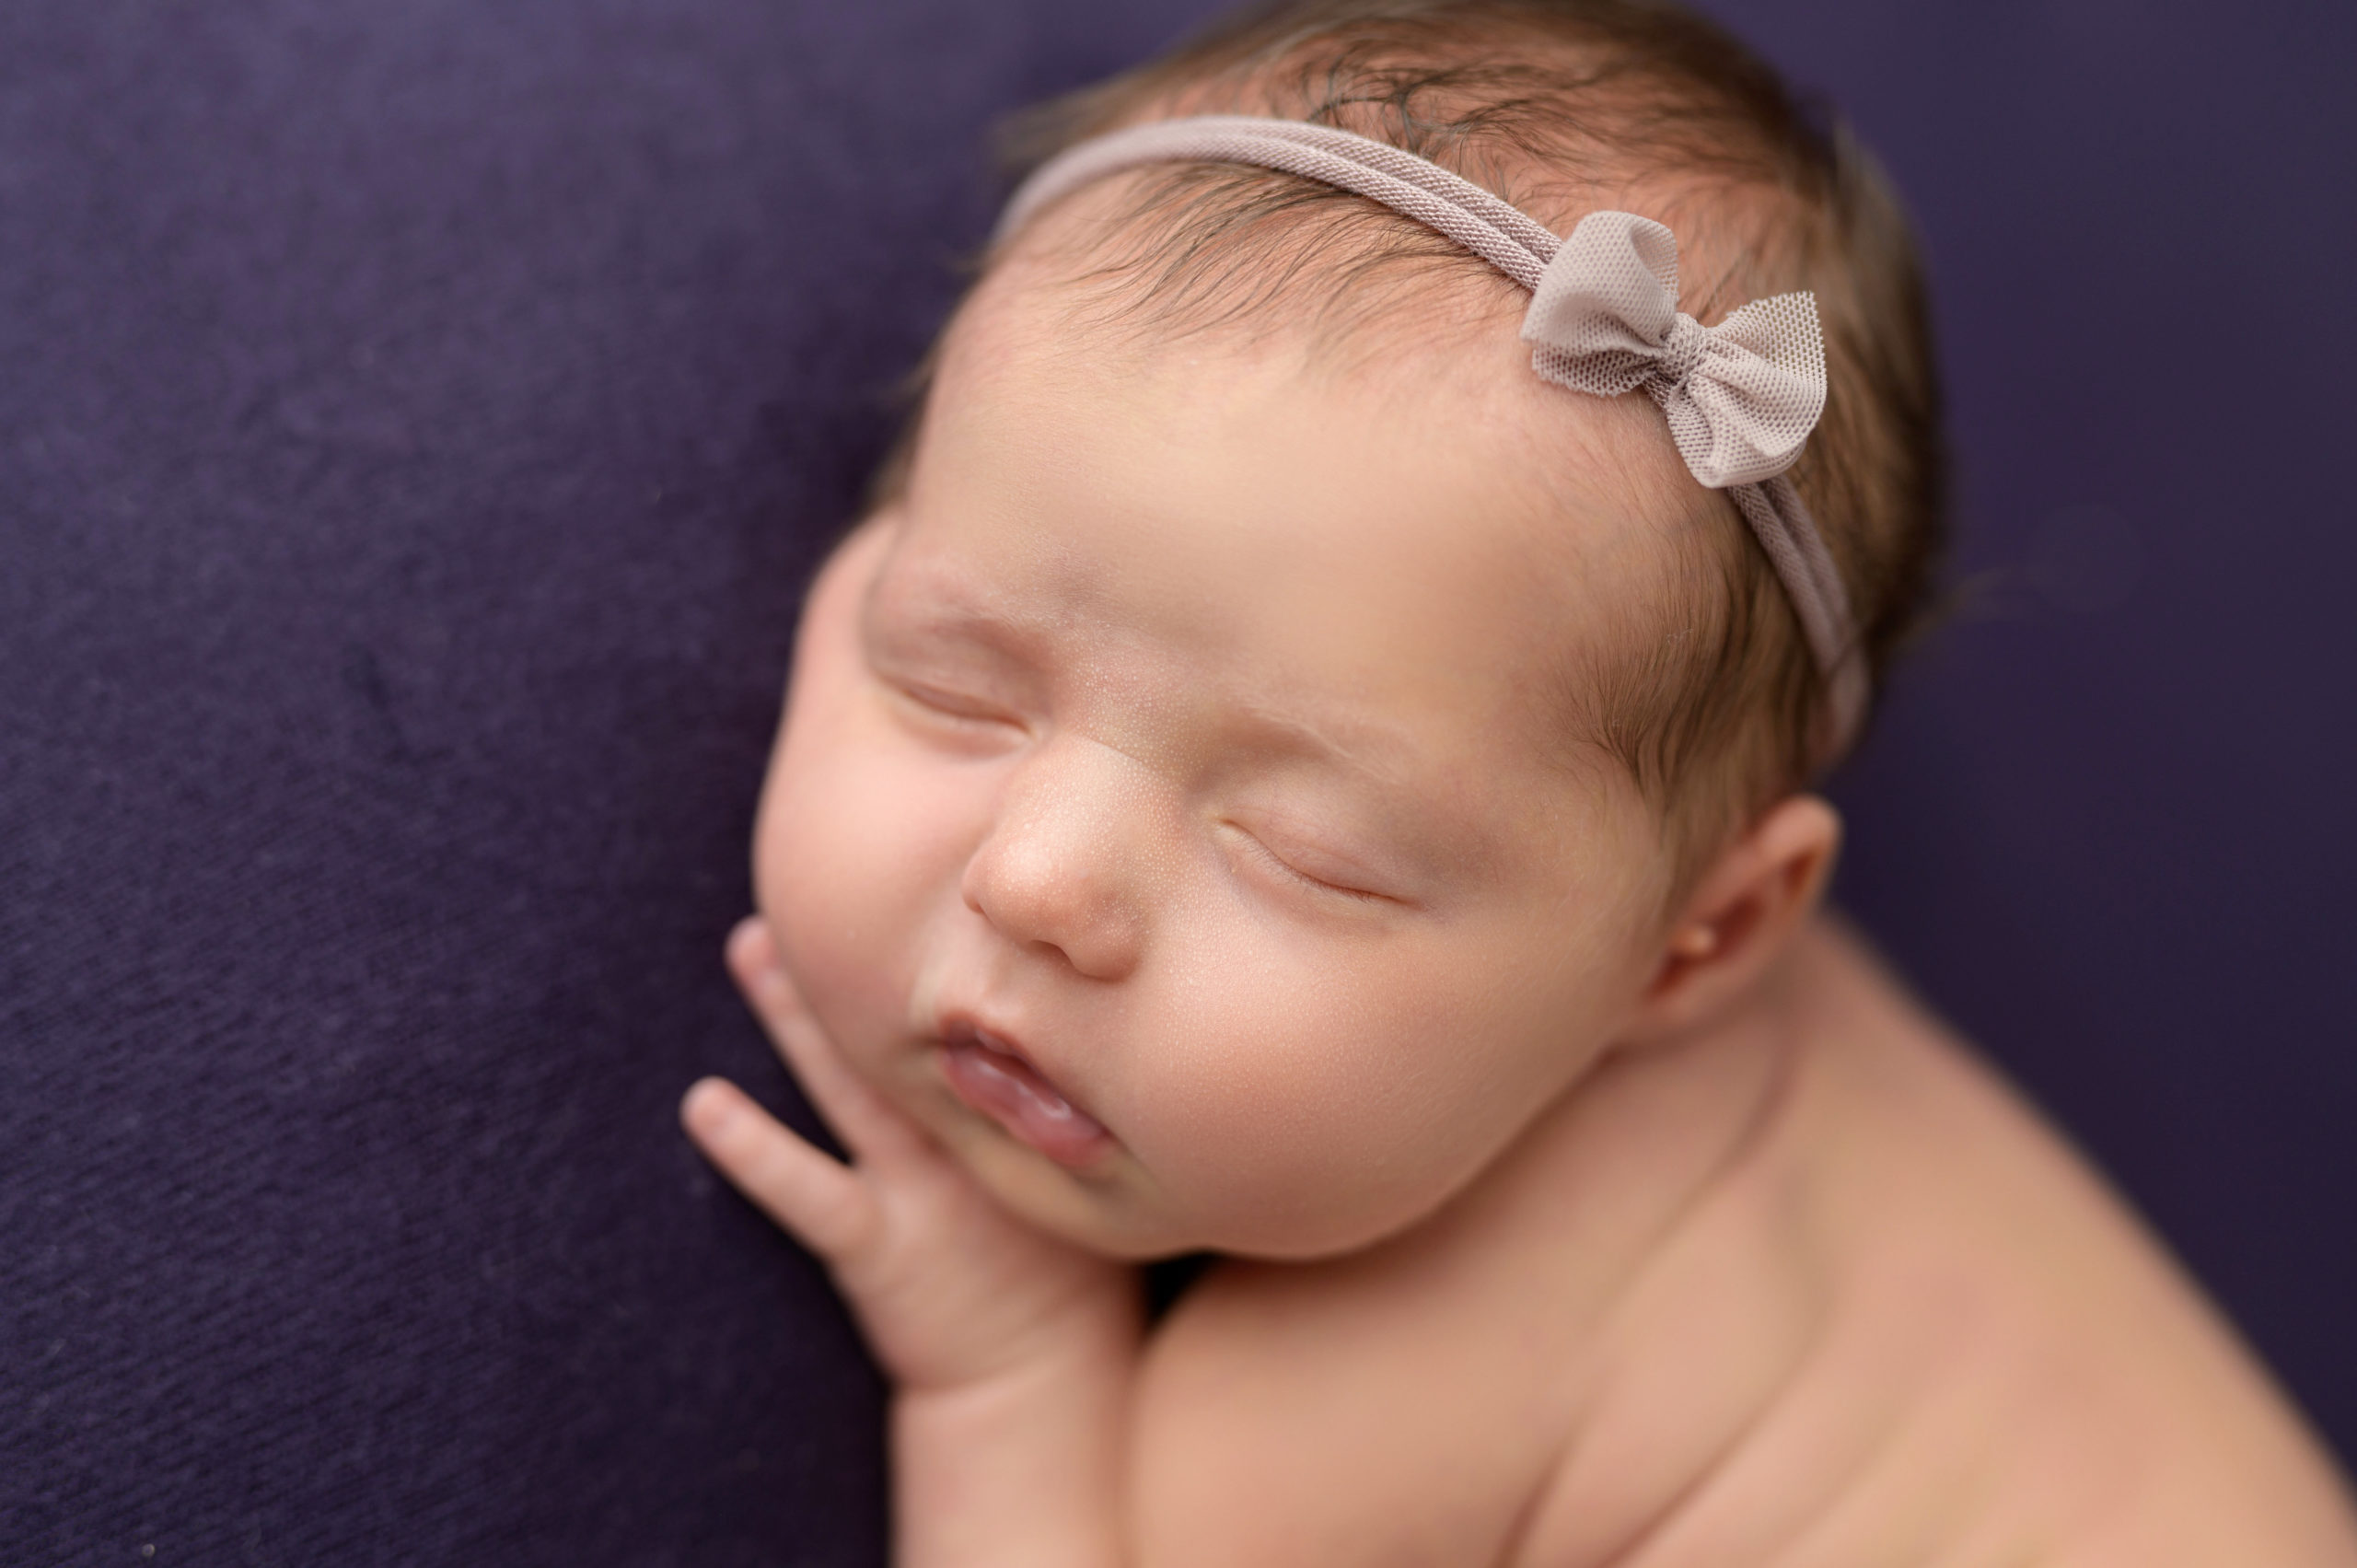 newborn baby sleeping on purple